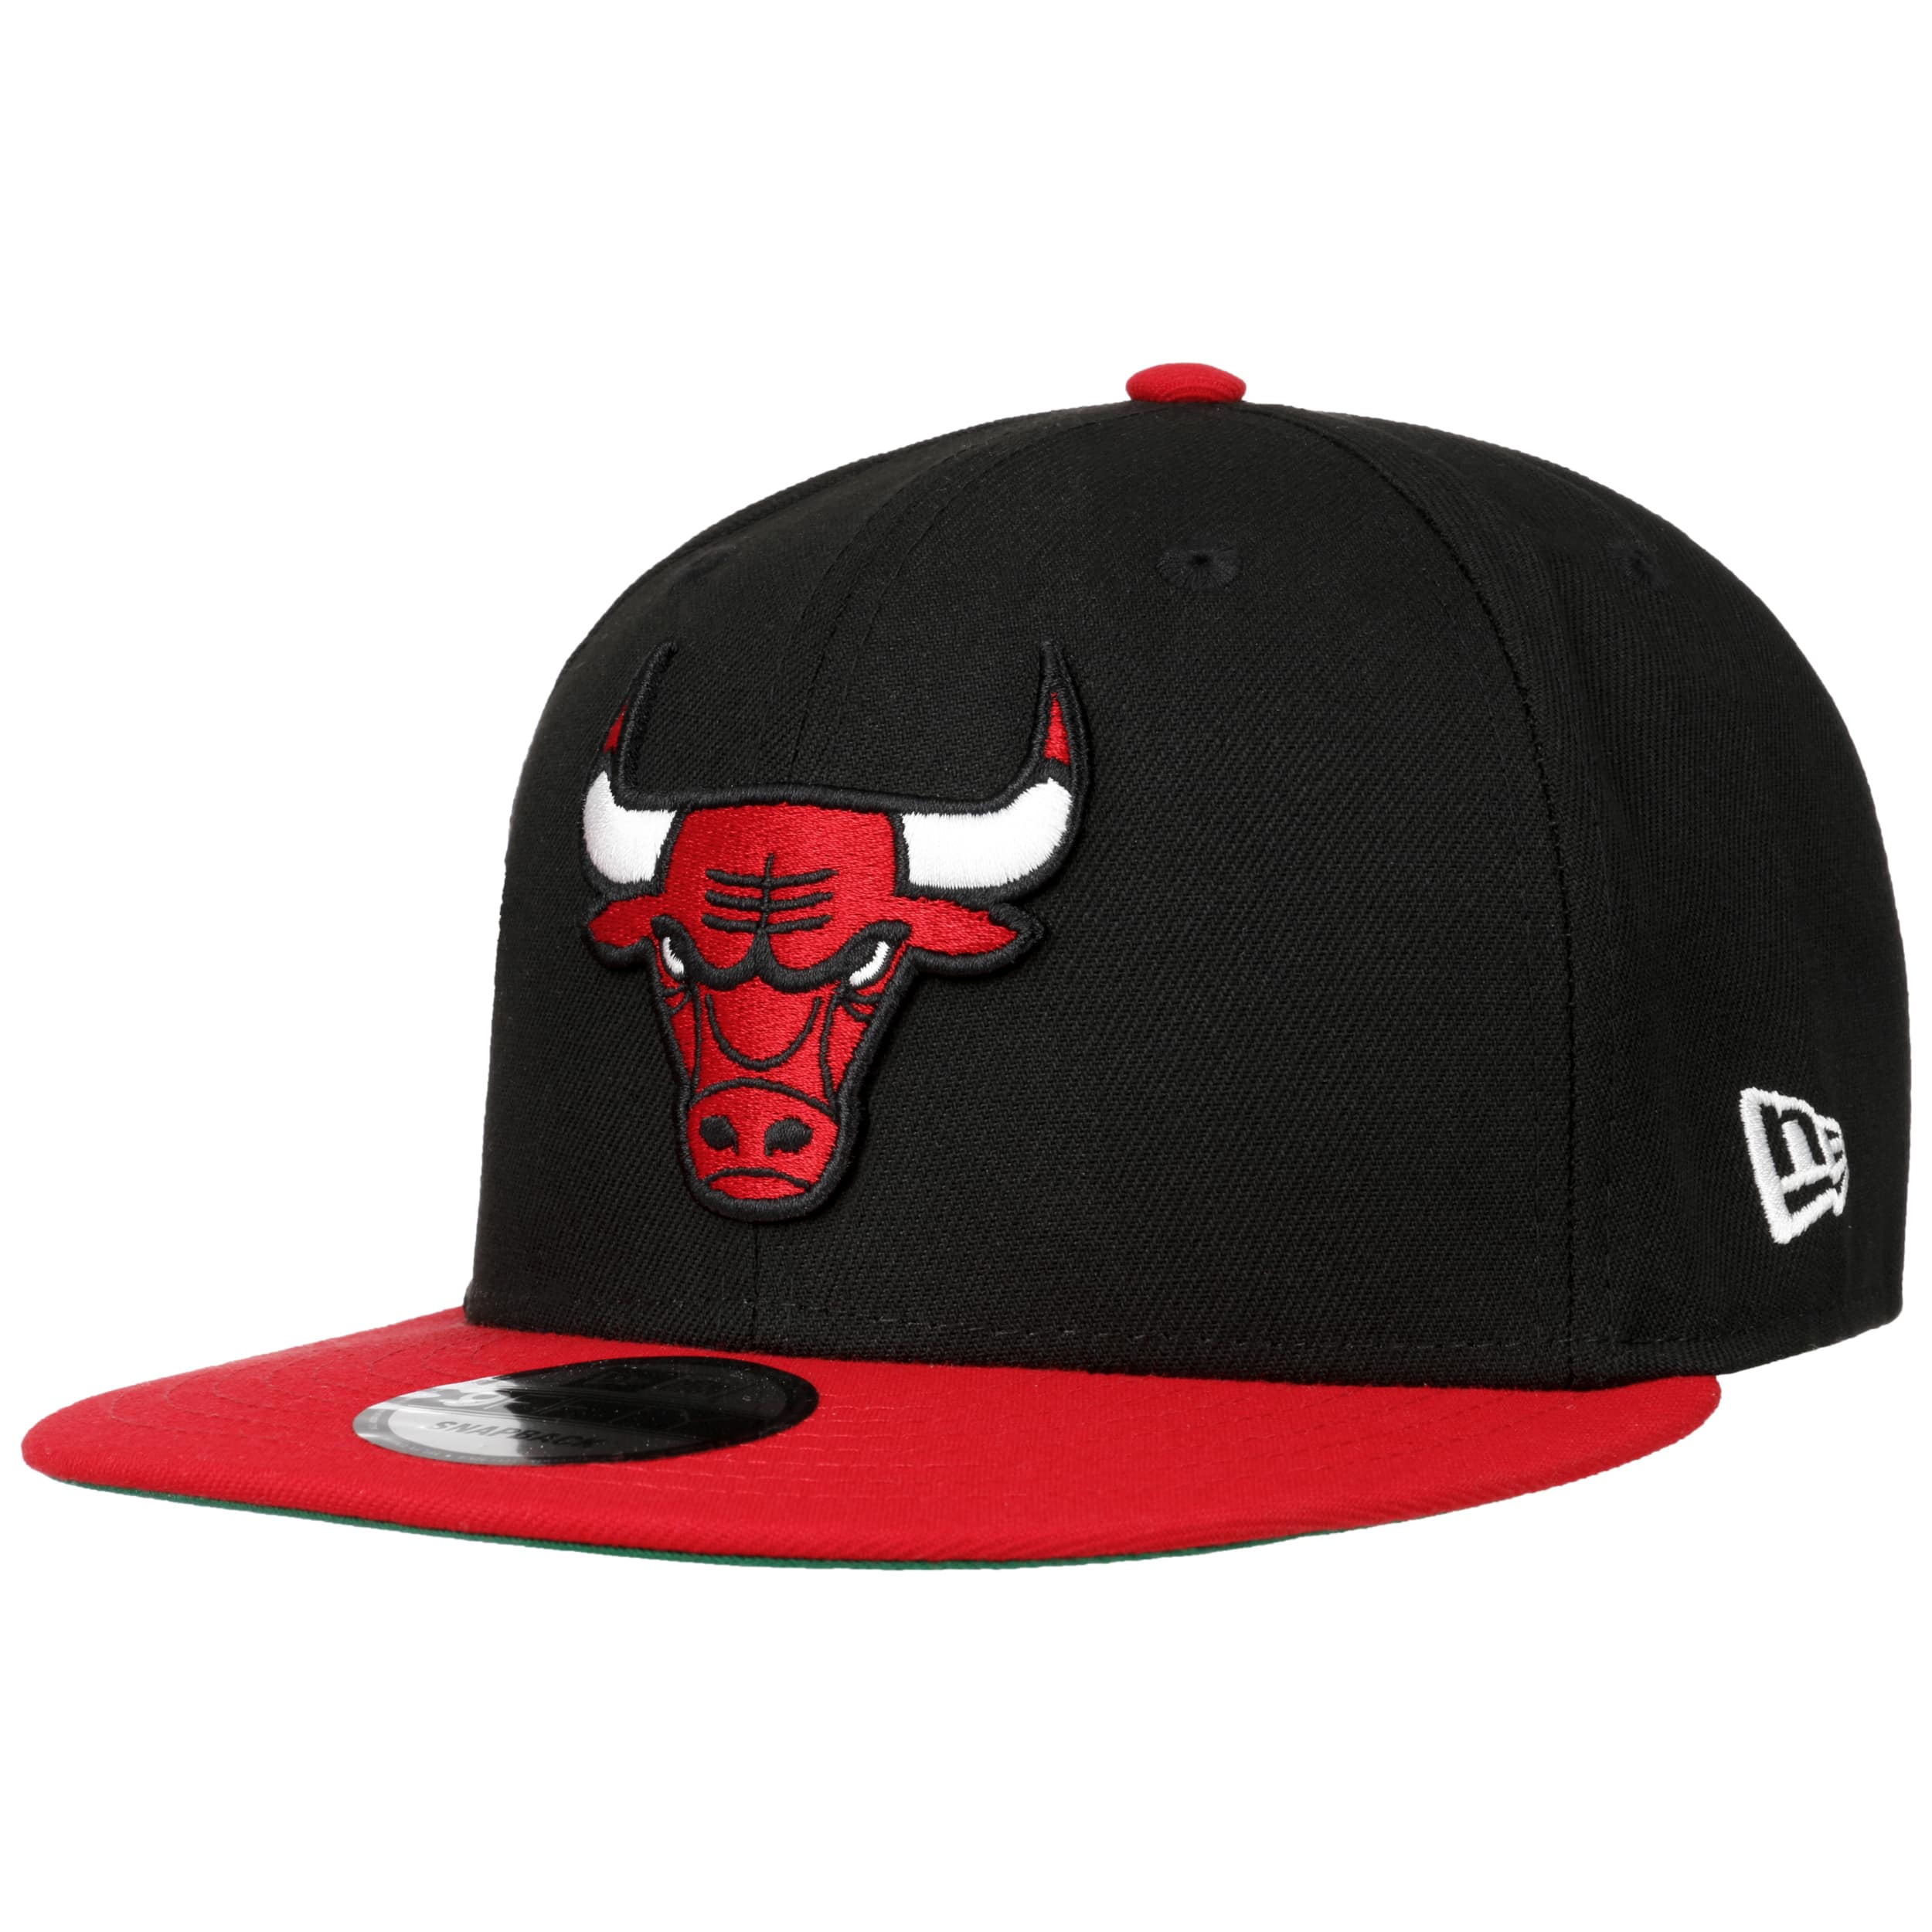 red bulls hat